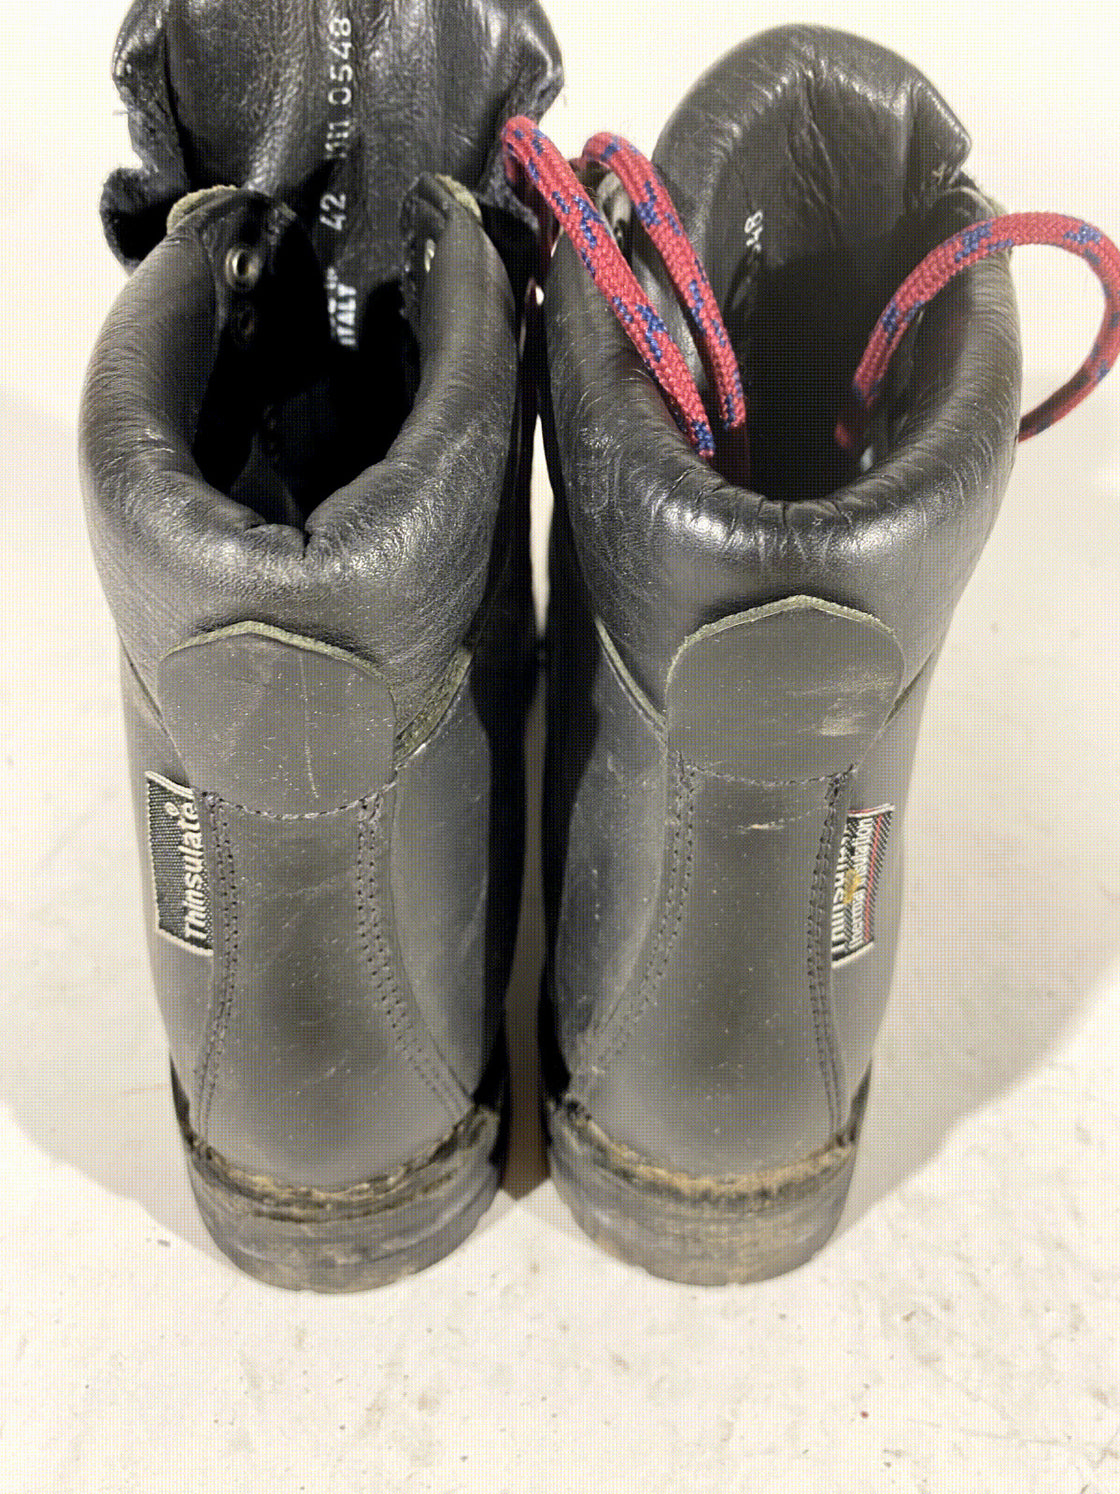 Crispi Telemark Nordic Norm Cross Ski Boots Size EU42 US9 NN 75mm